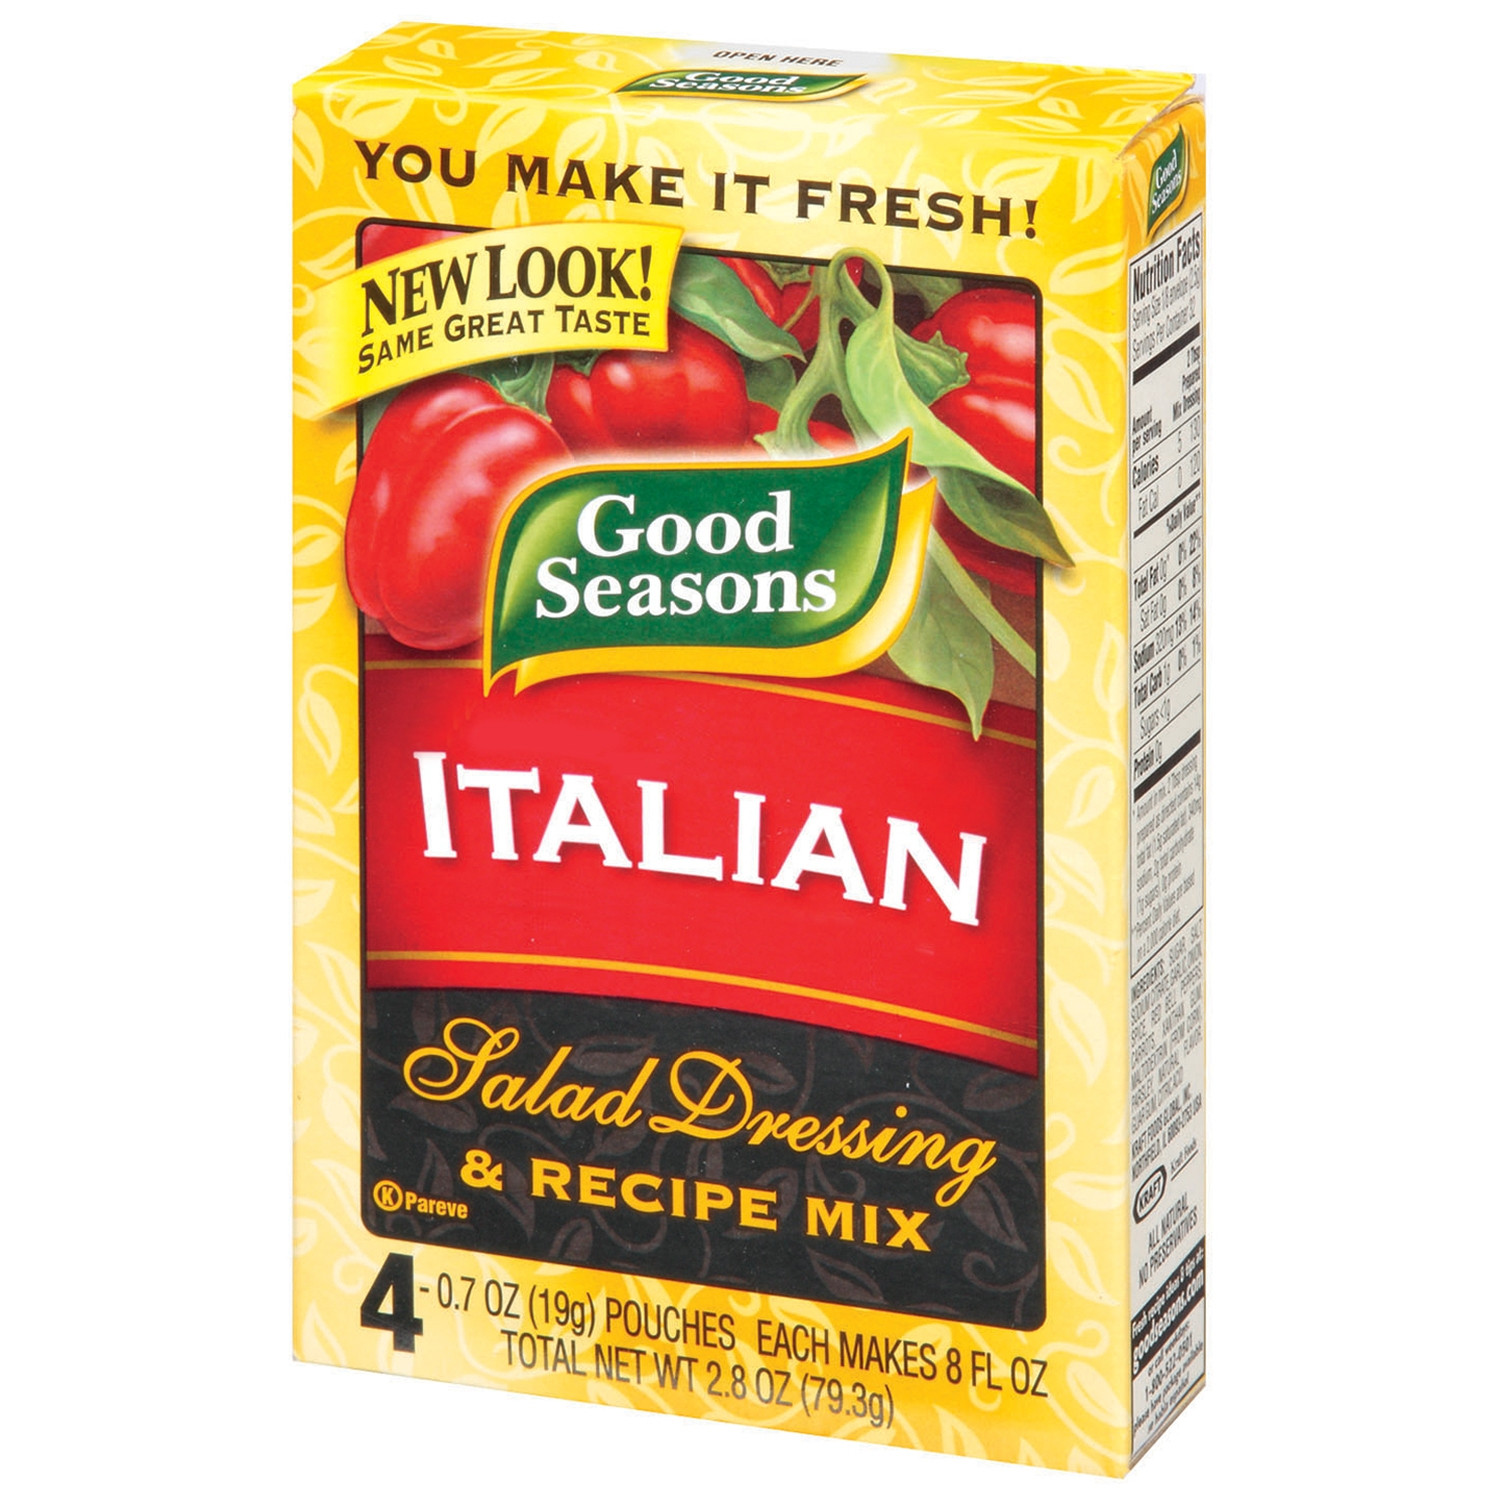 Recipes Using Good Seasons Italian Dressing Mix Awesome Good Seasons Dressing Recipe Mix Italian 4 Count 2 8 Oz